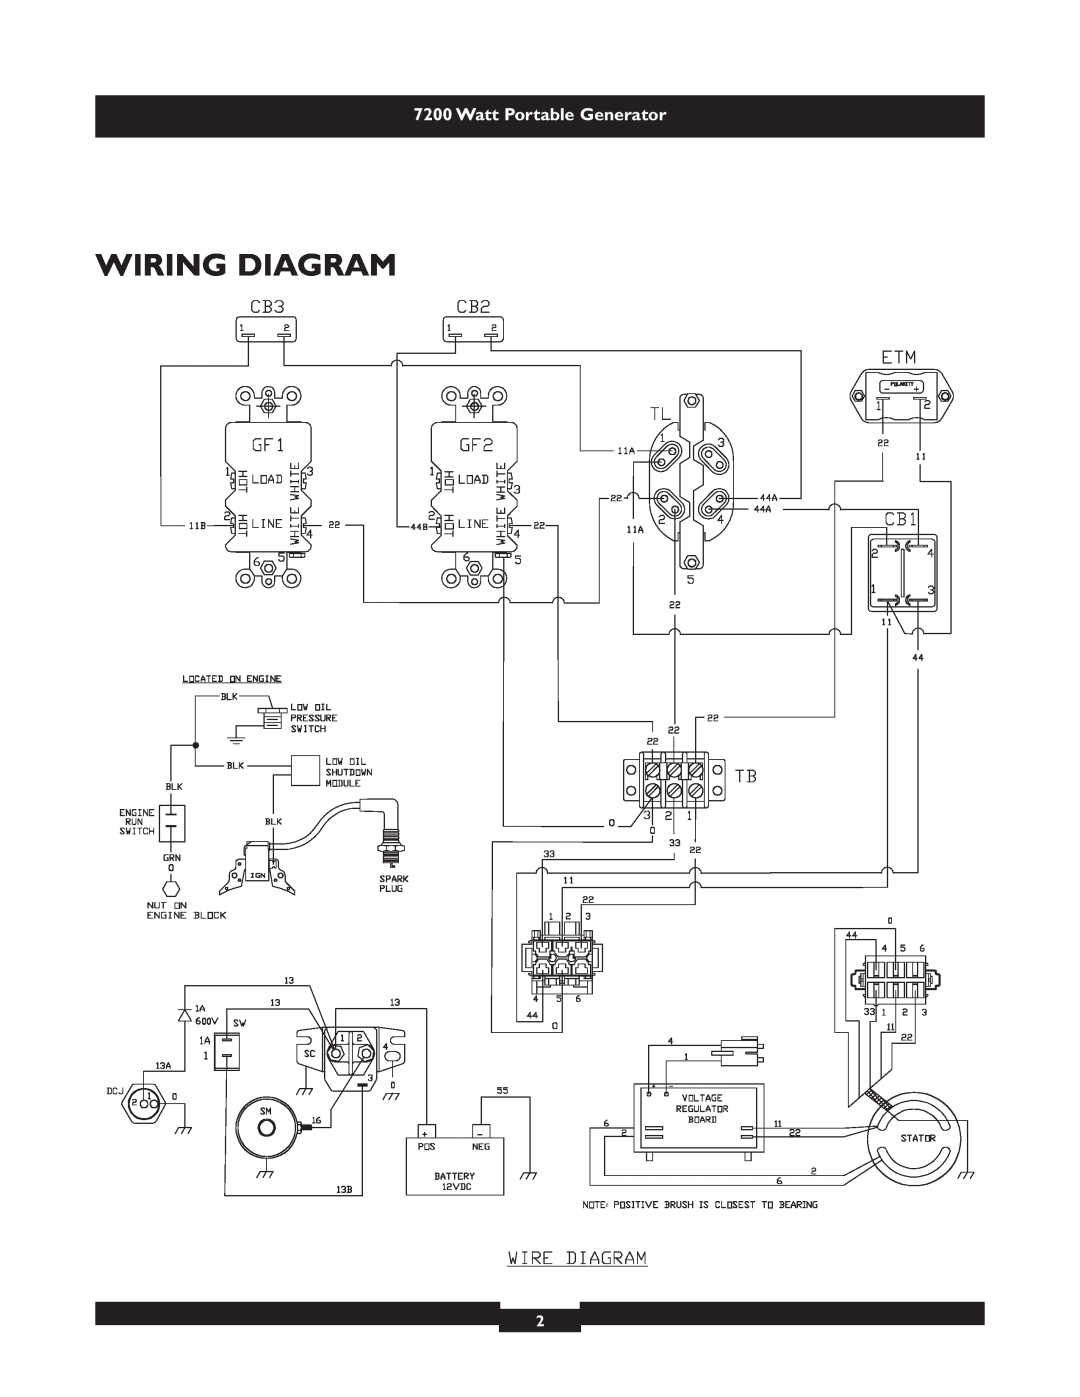 Briggs & Stratton 030254 manual Wiring Diagram, Watt Portable Generator 